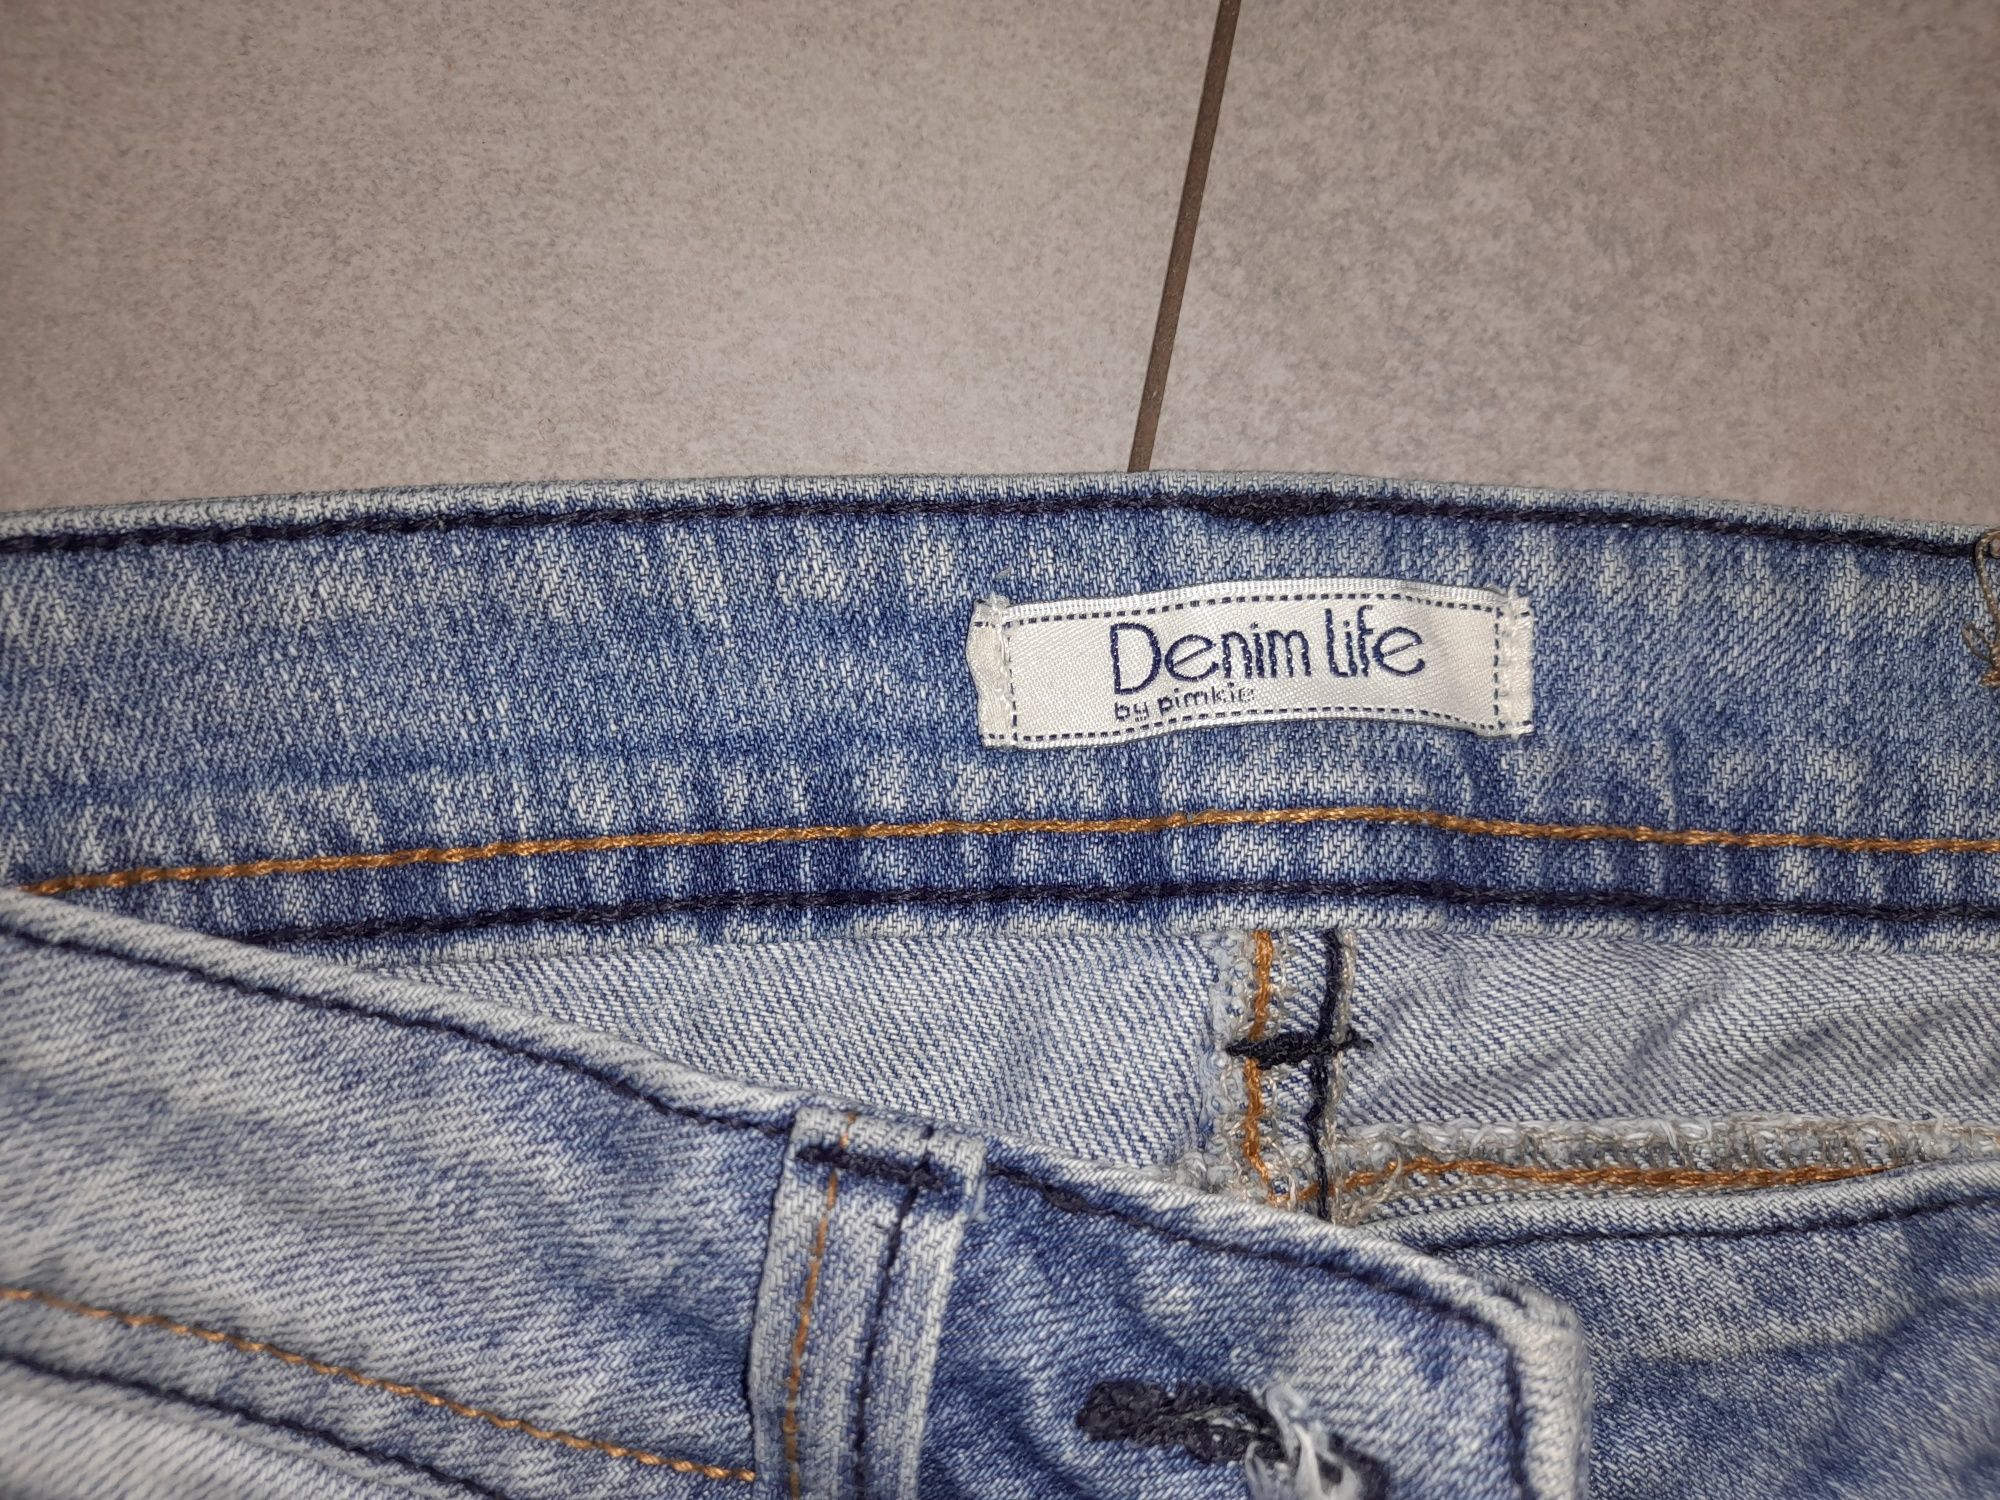 Spodnie jeansy proste PIMKIE